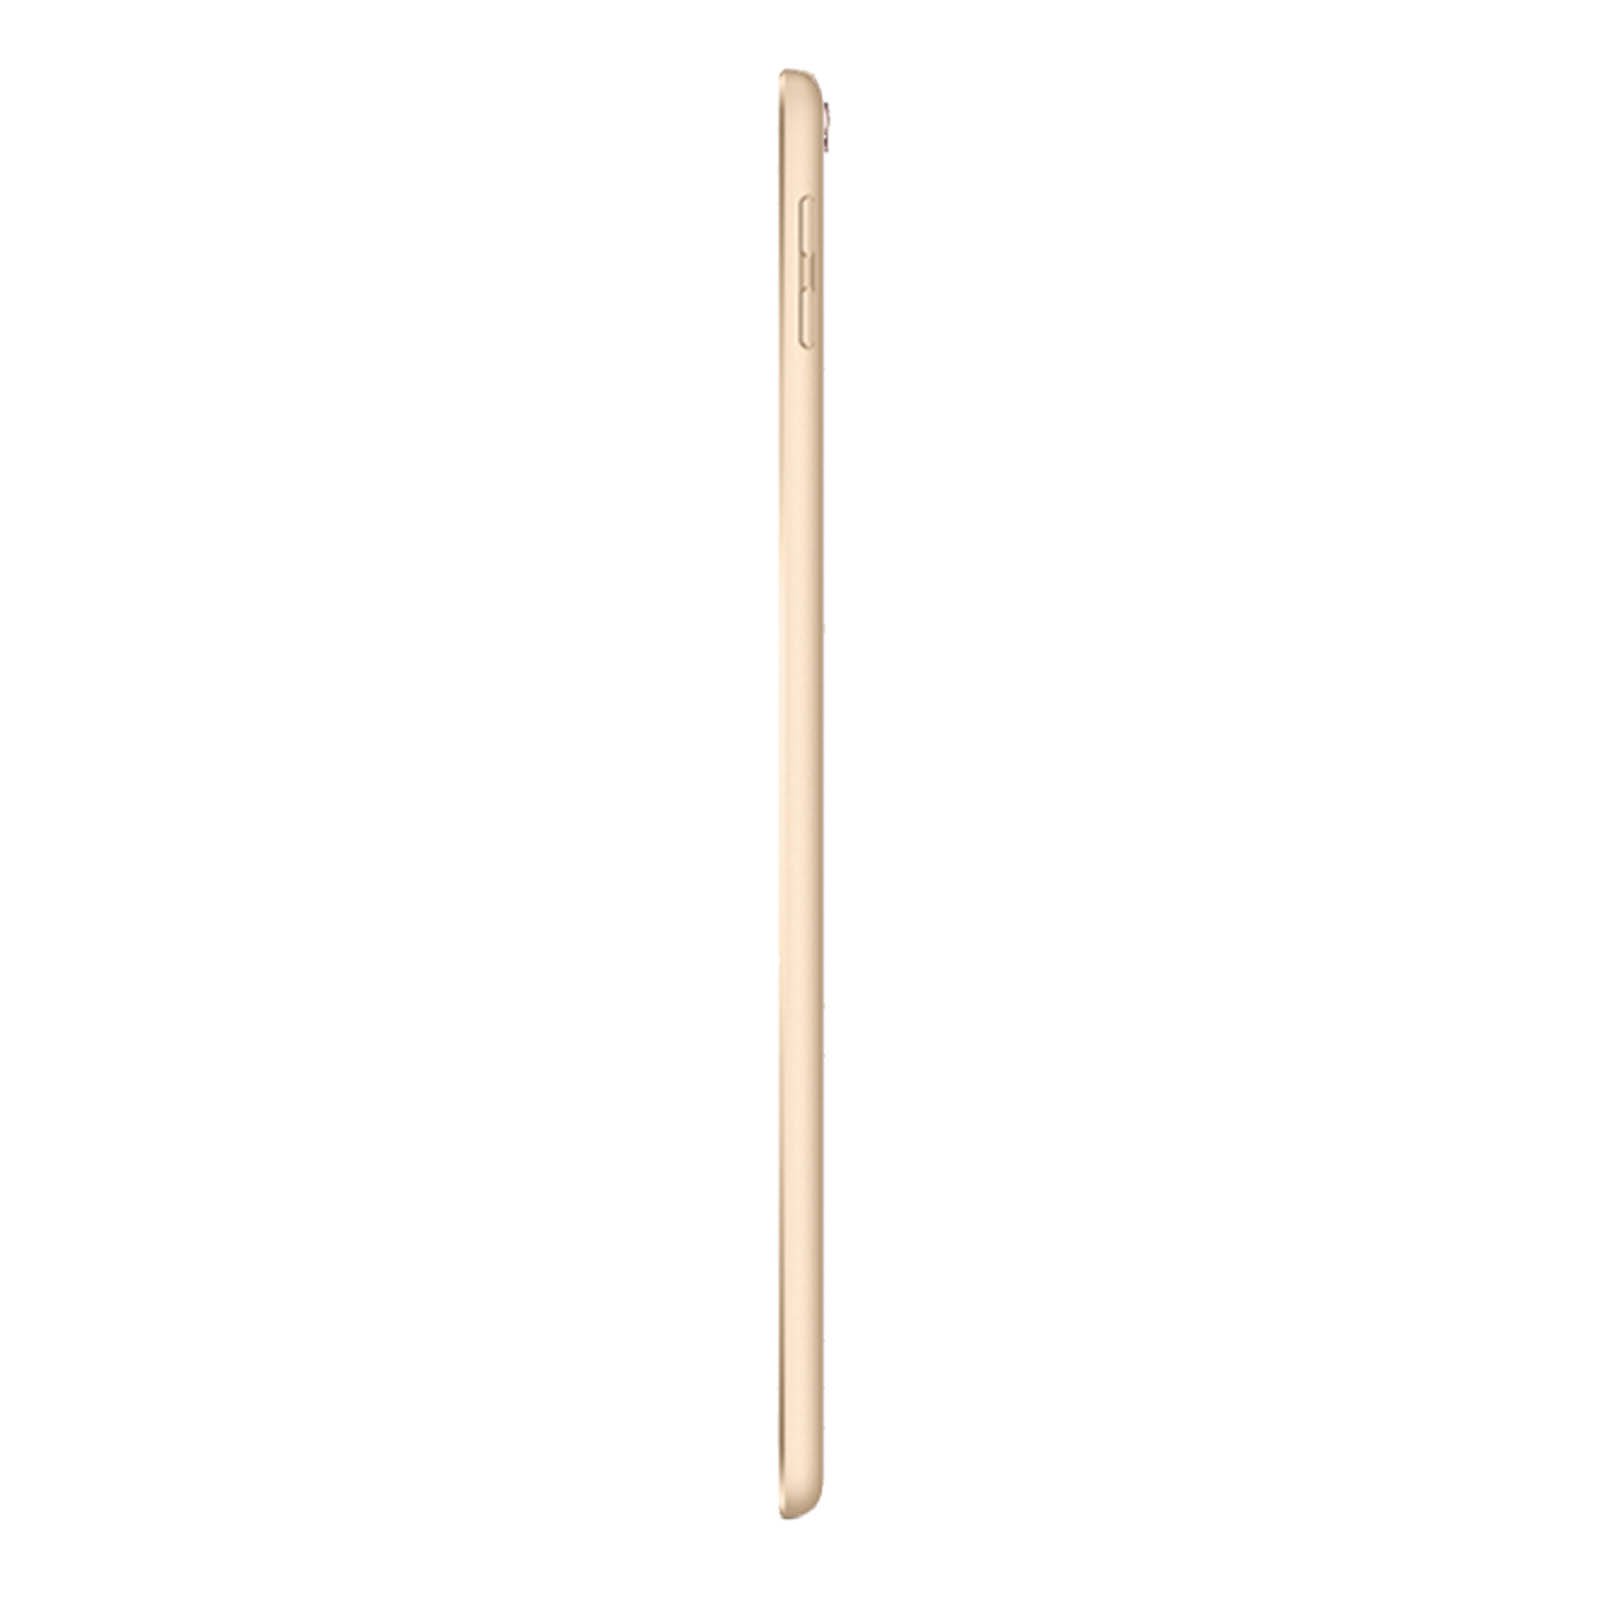 iPad Pro 10.5 Inch 256GB Gold Good - Unlocked